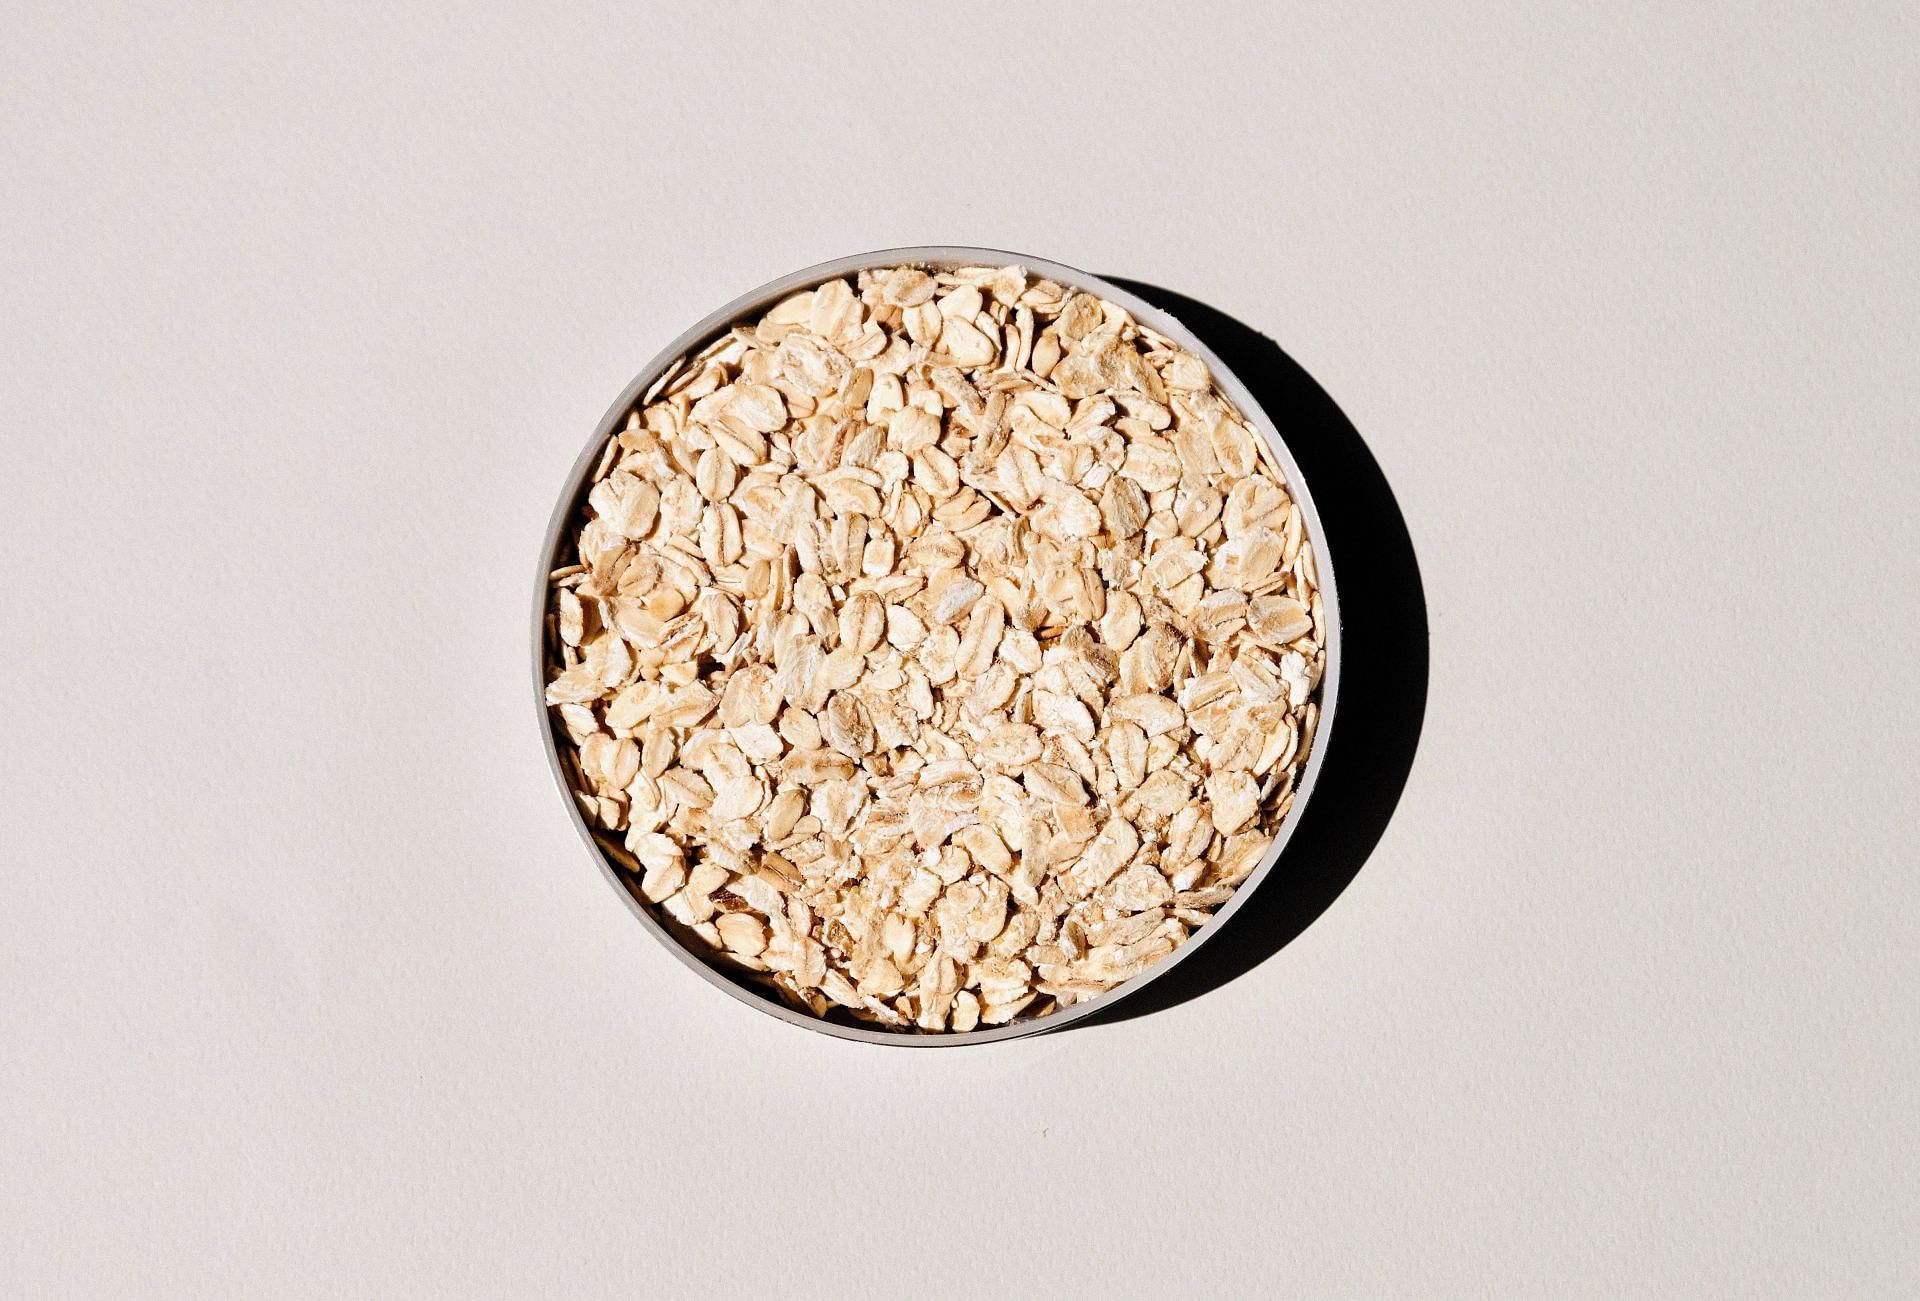 oats can be a great source of fiber. (image via unsplash / jocelyn morales)